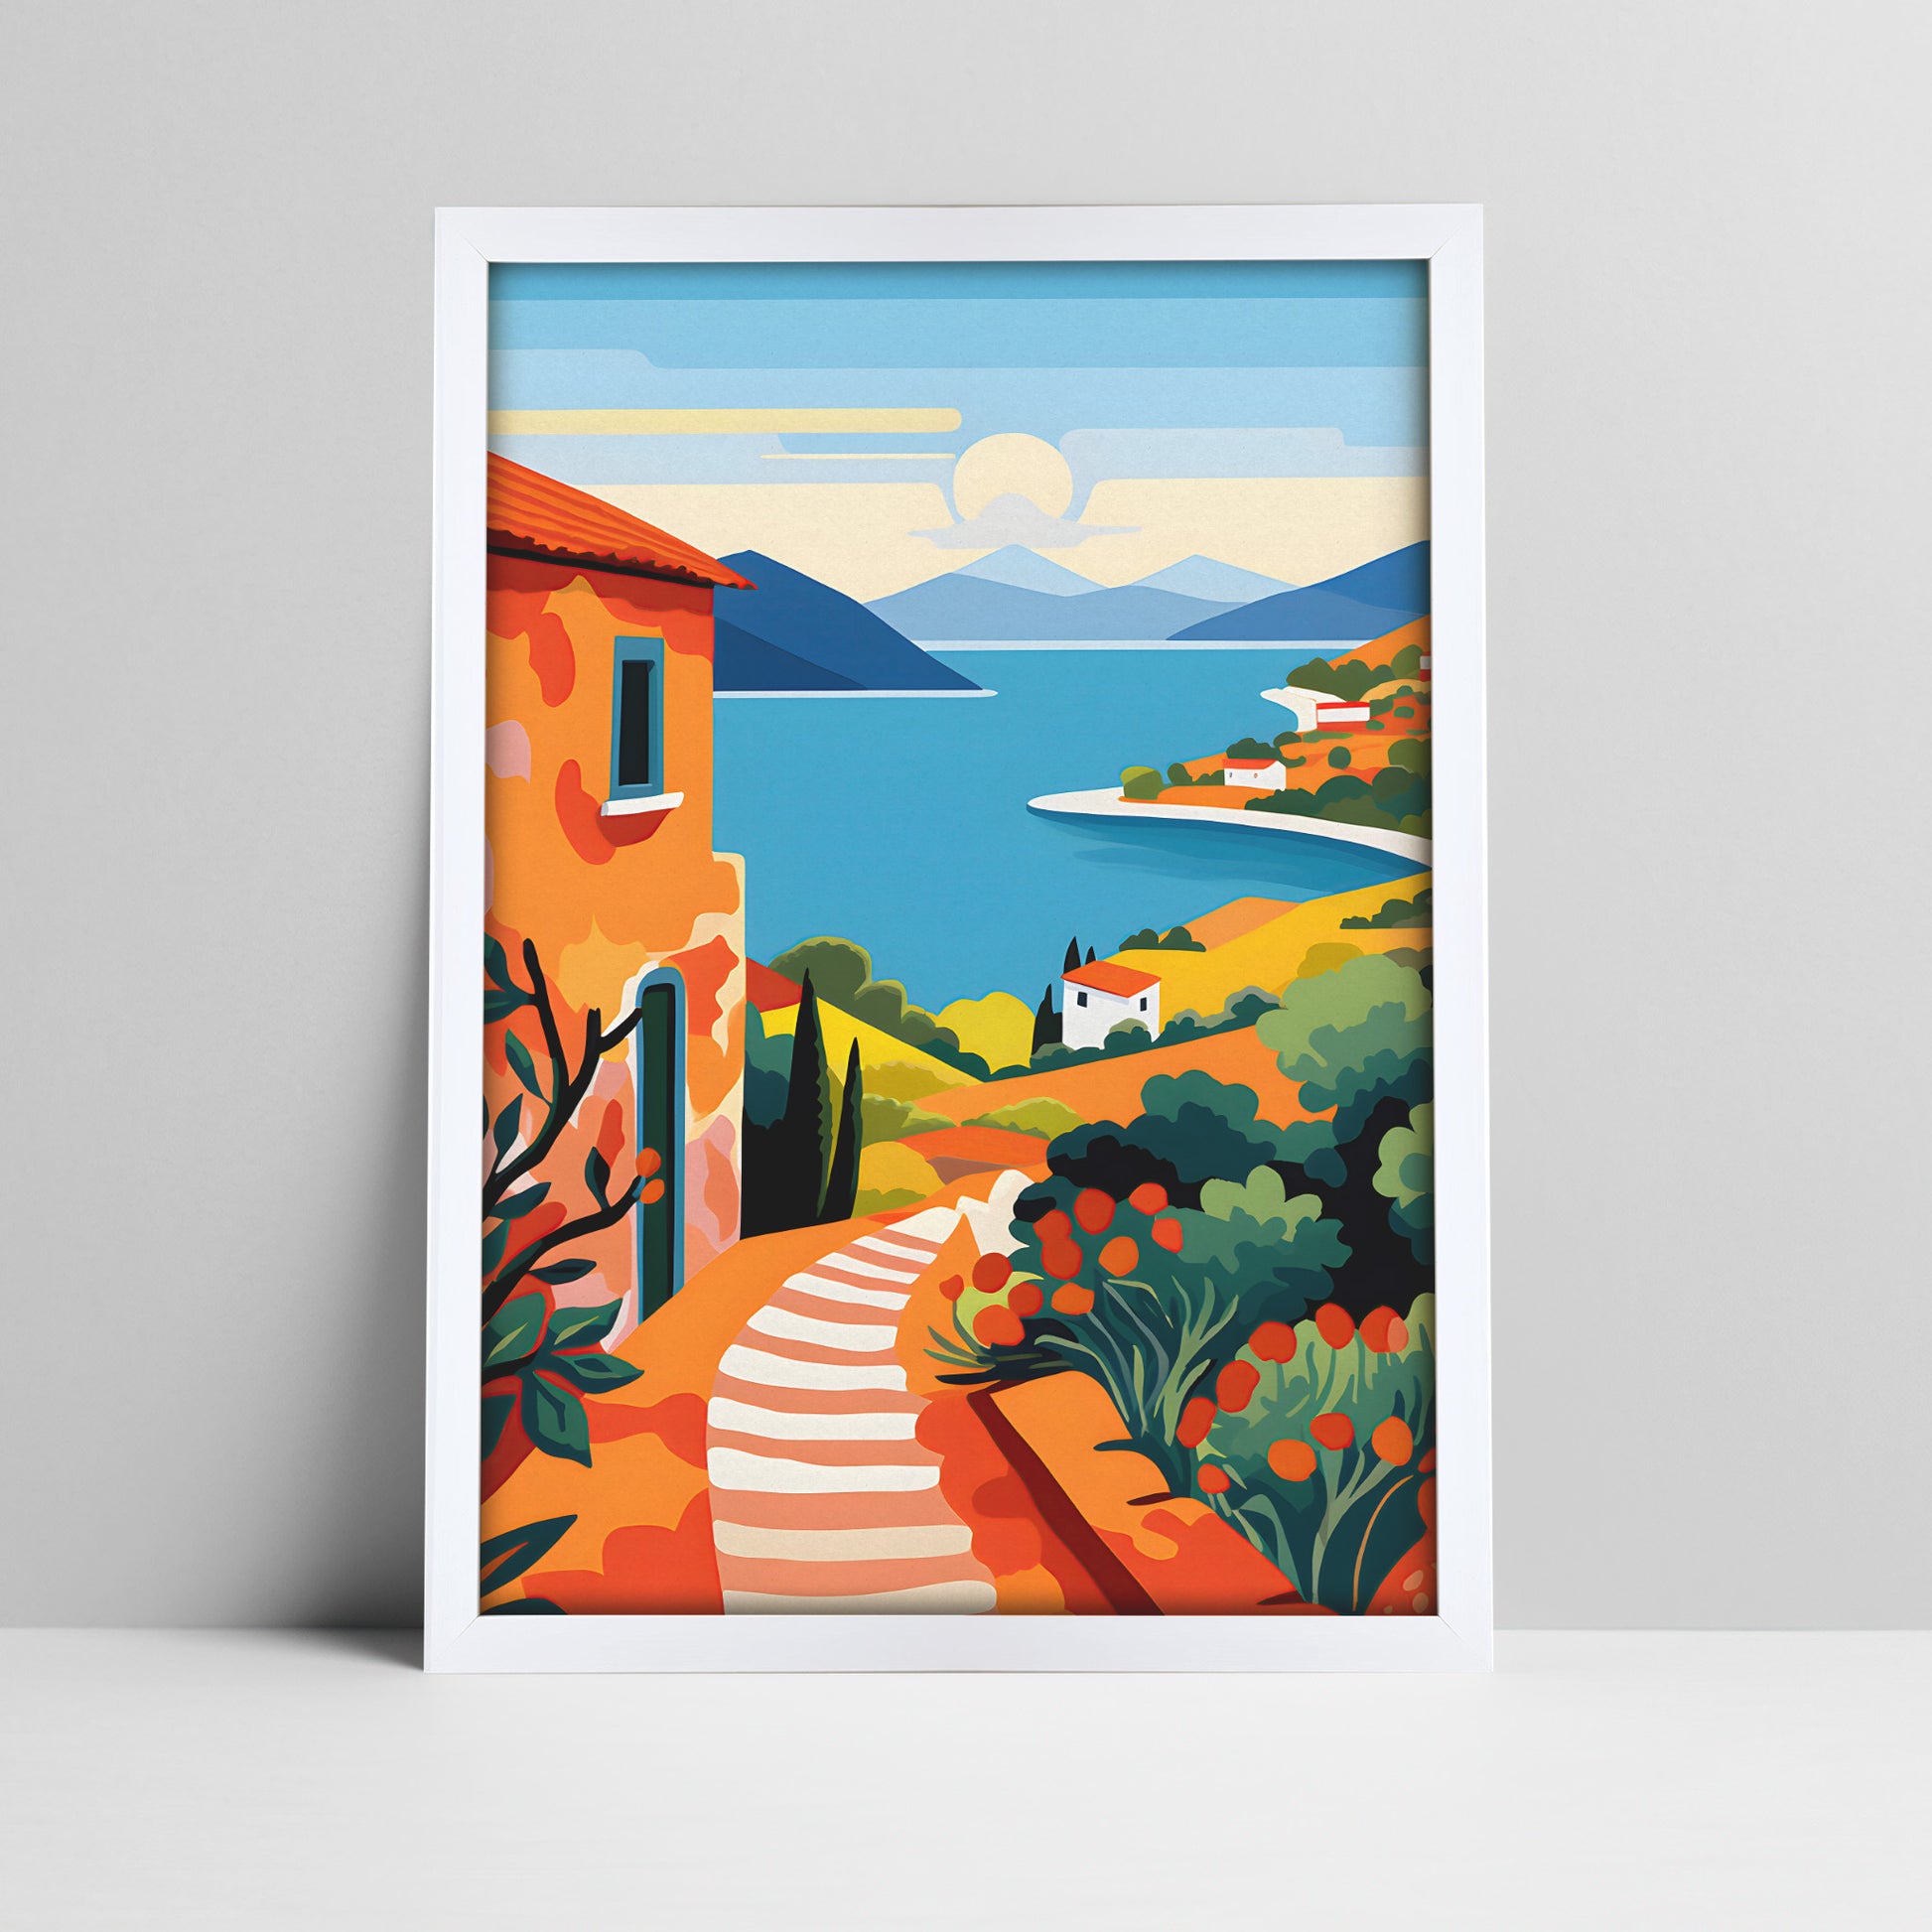 Art print of a mediterranean coastal village landscape illustration in a white frame